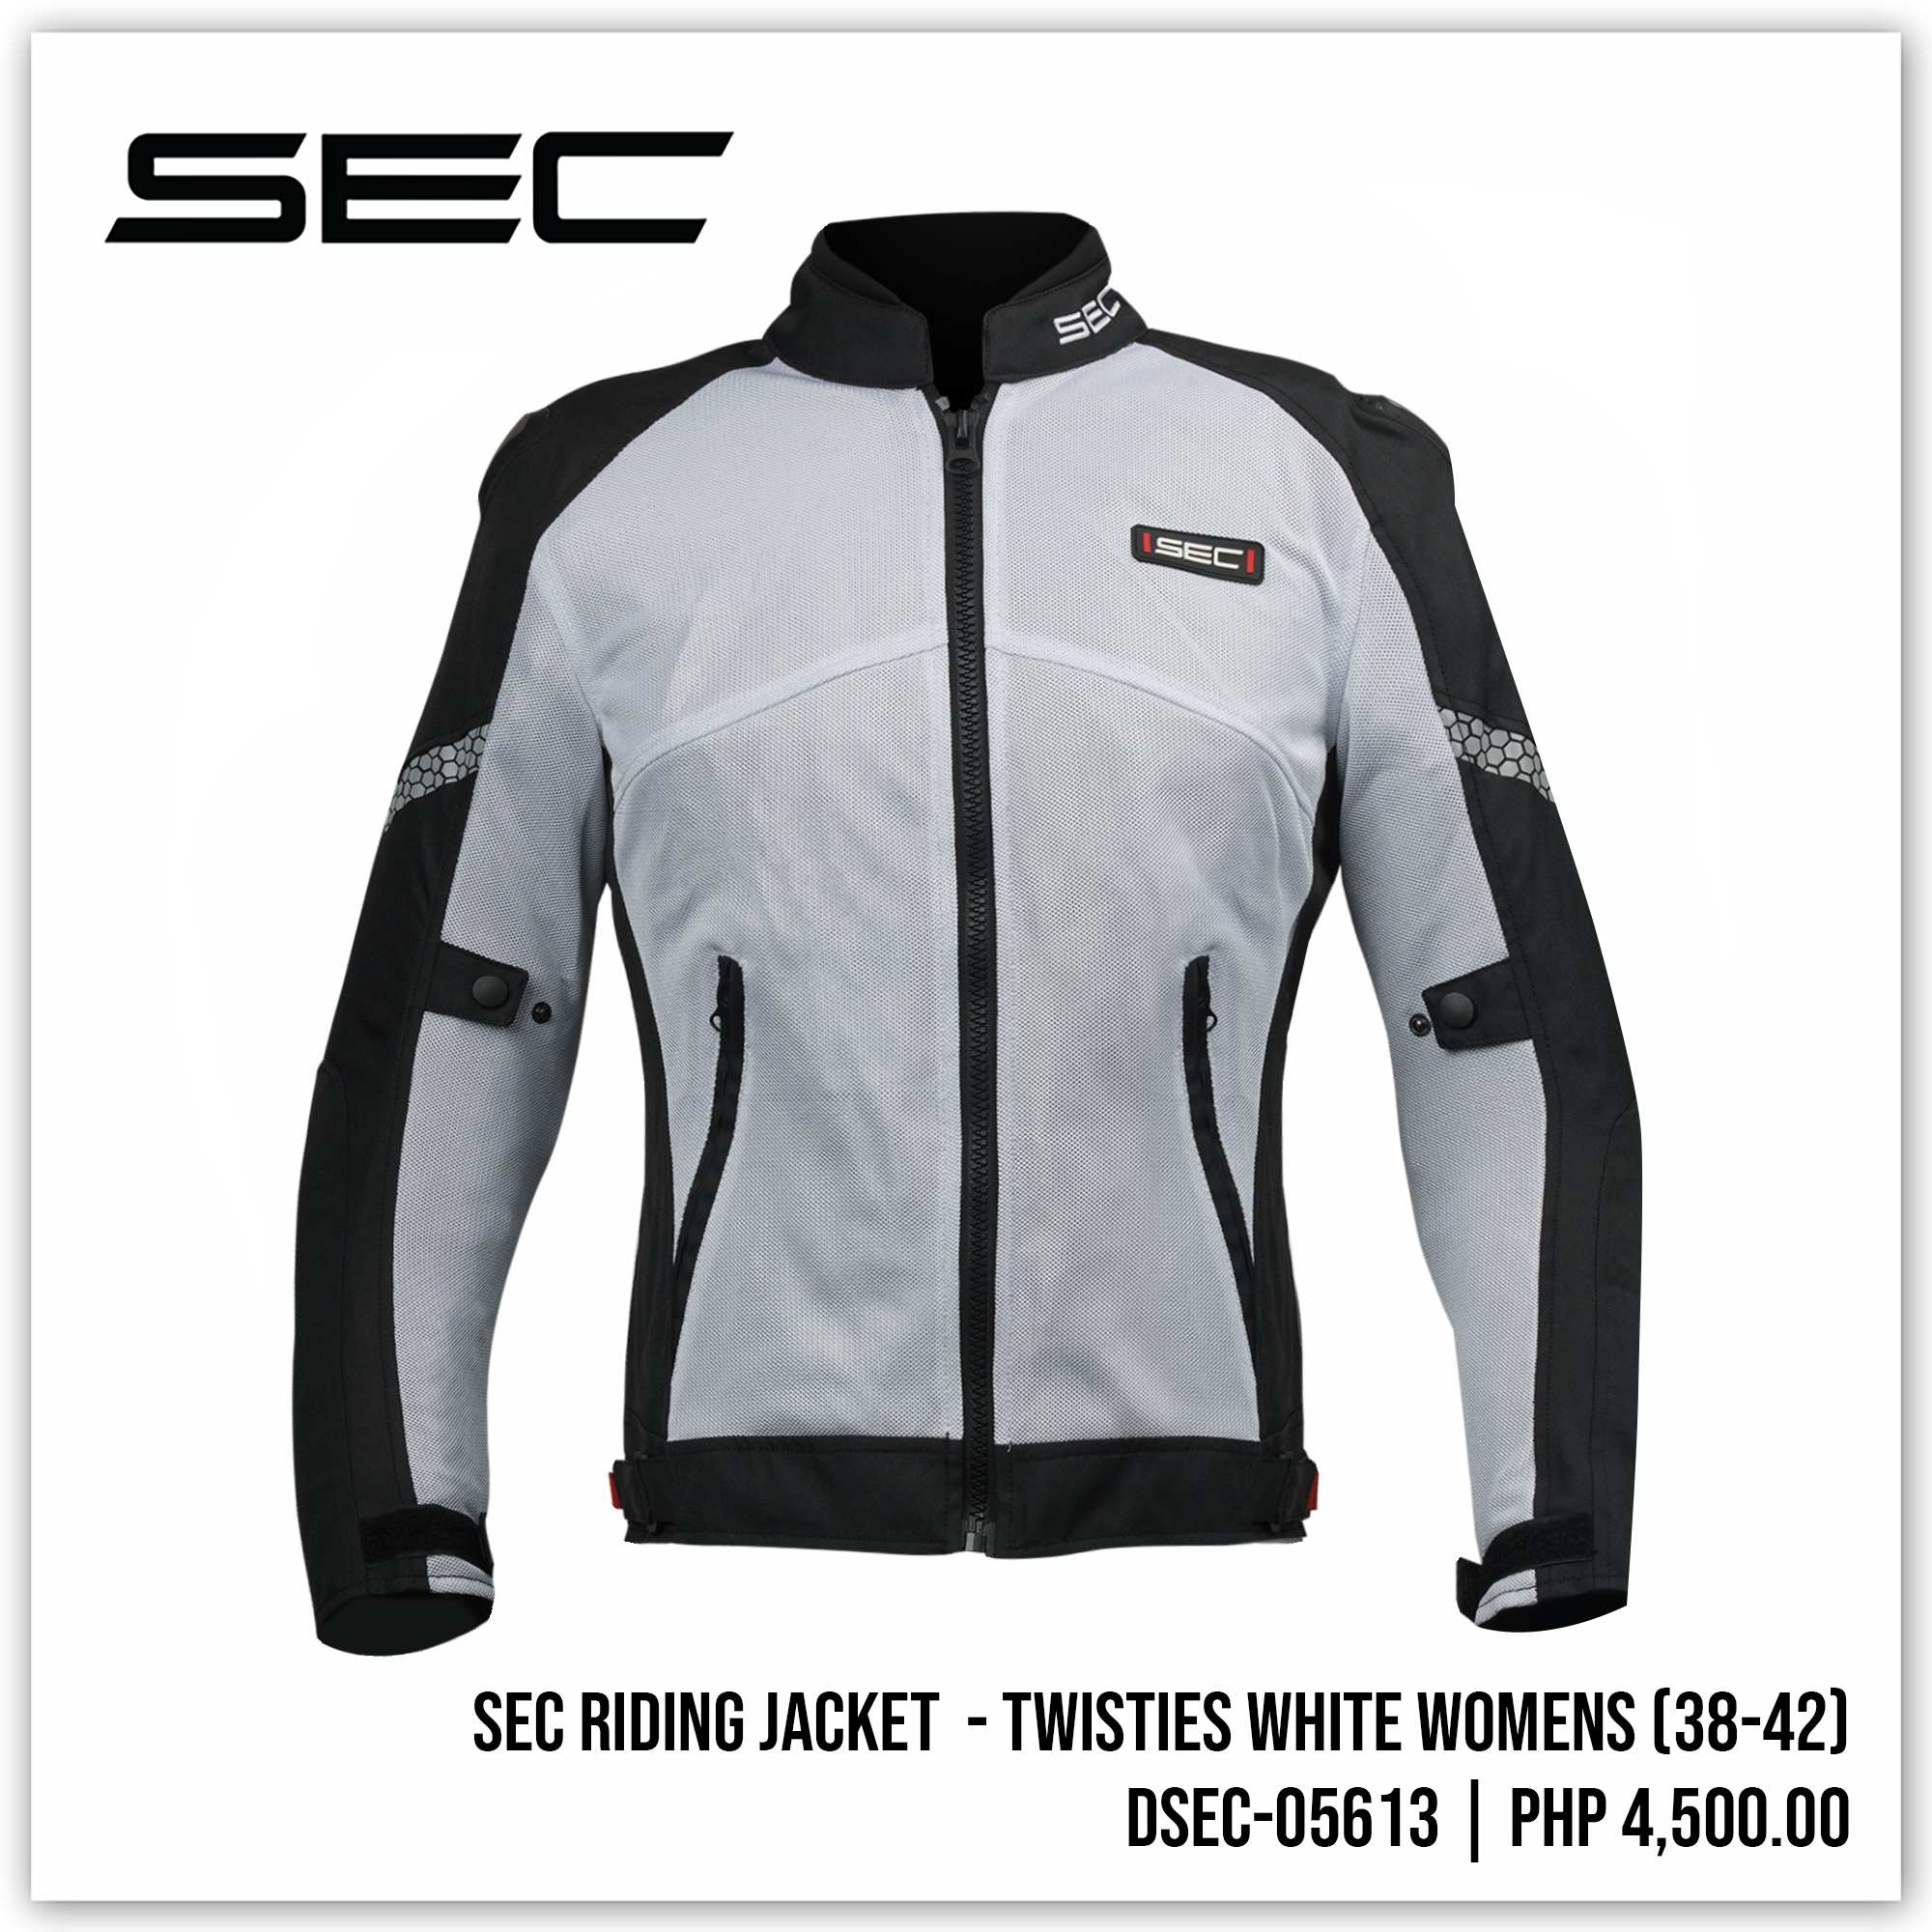 SEC Riding Jacket - Twisties White Womens